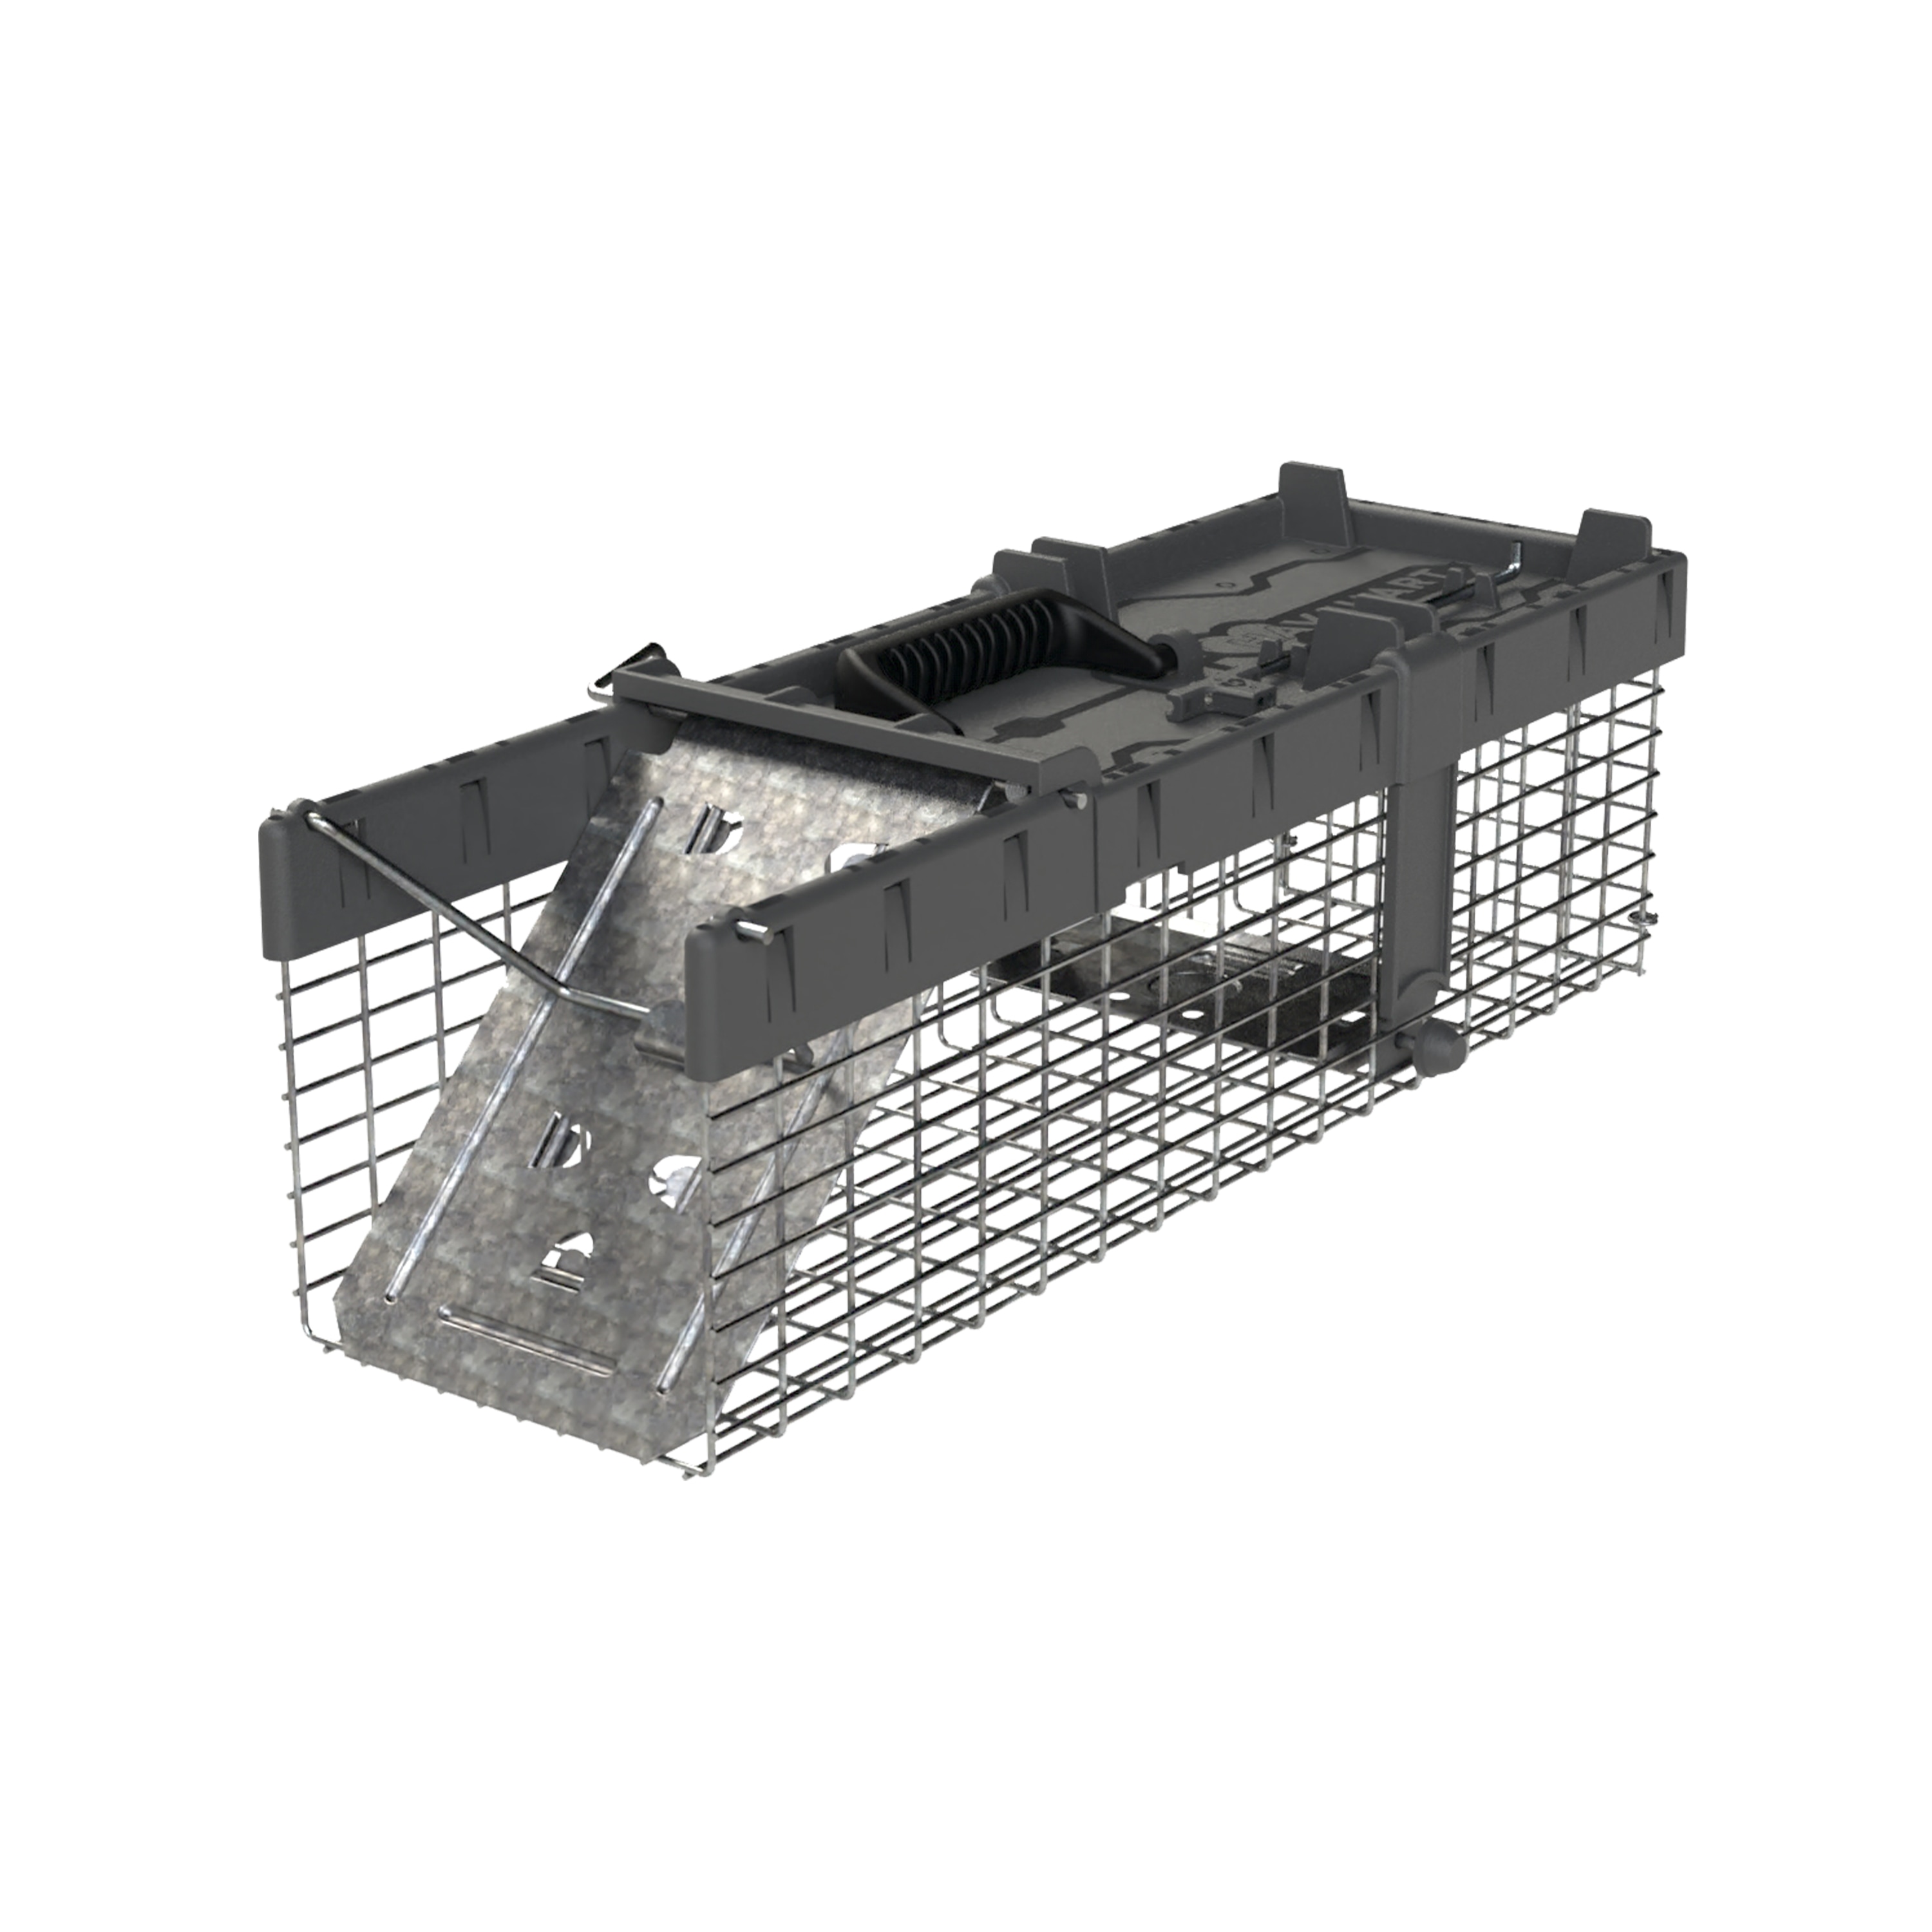 Havahart 1025, animal trap, Mechanical trap, manufactured from Metallic